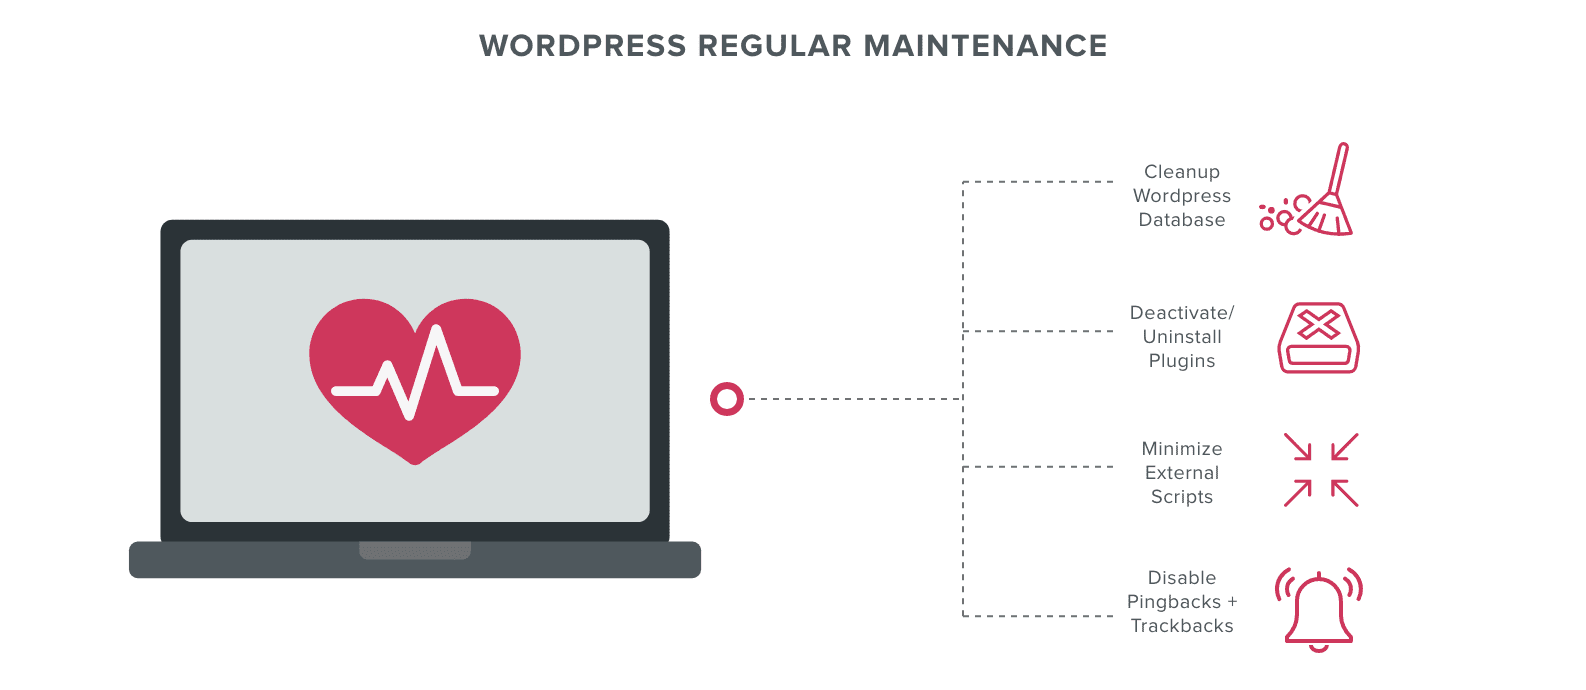 Wordpress regular maintenance